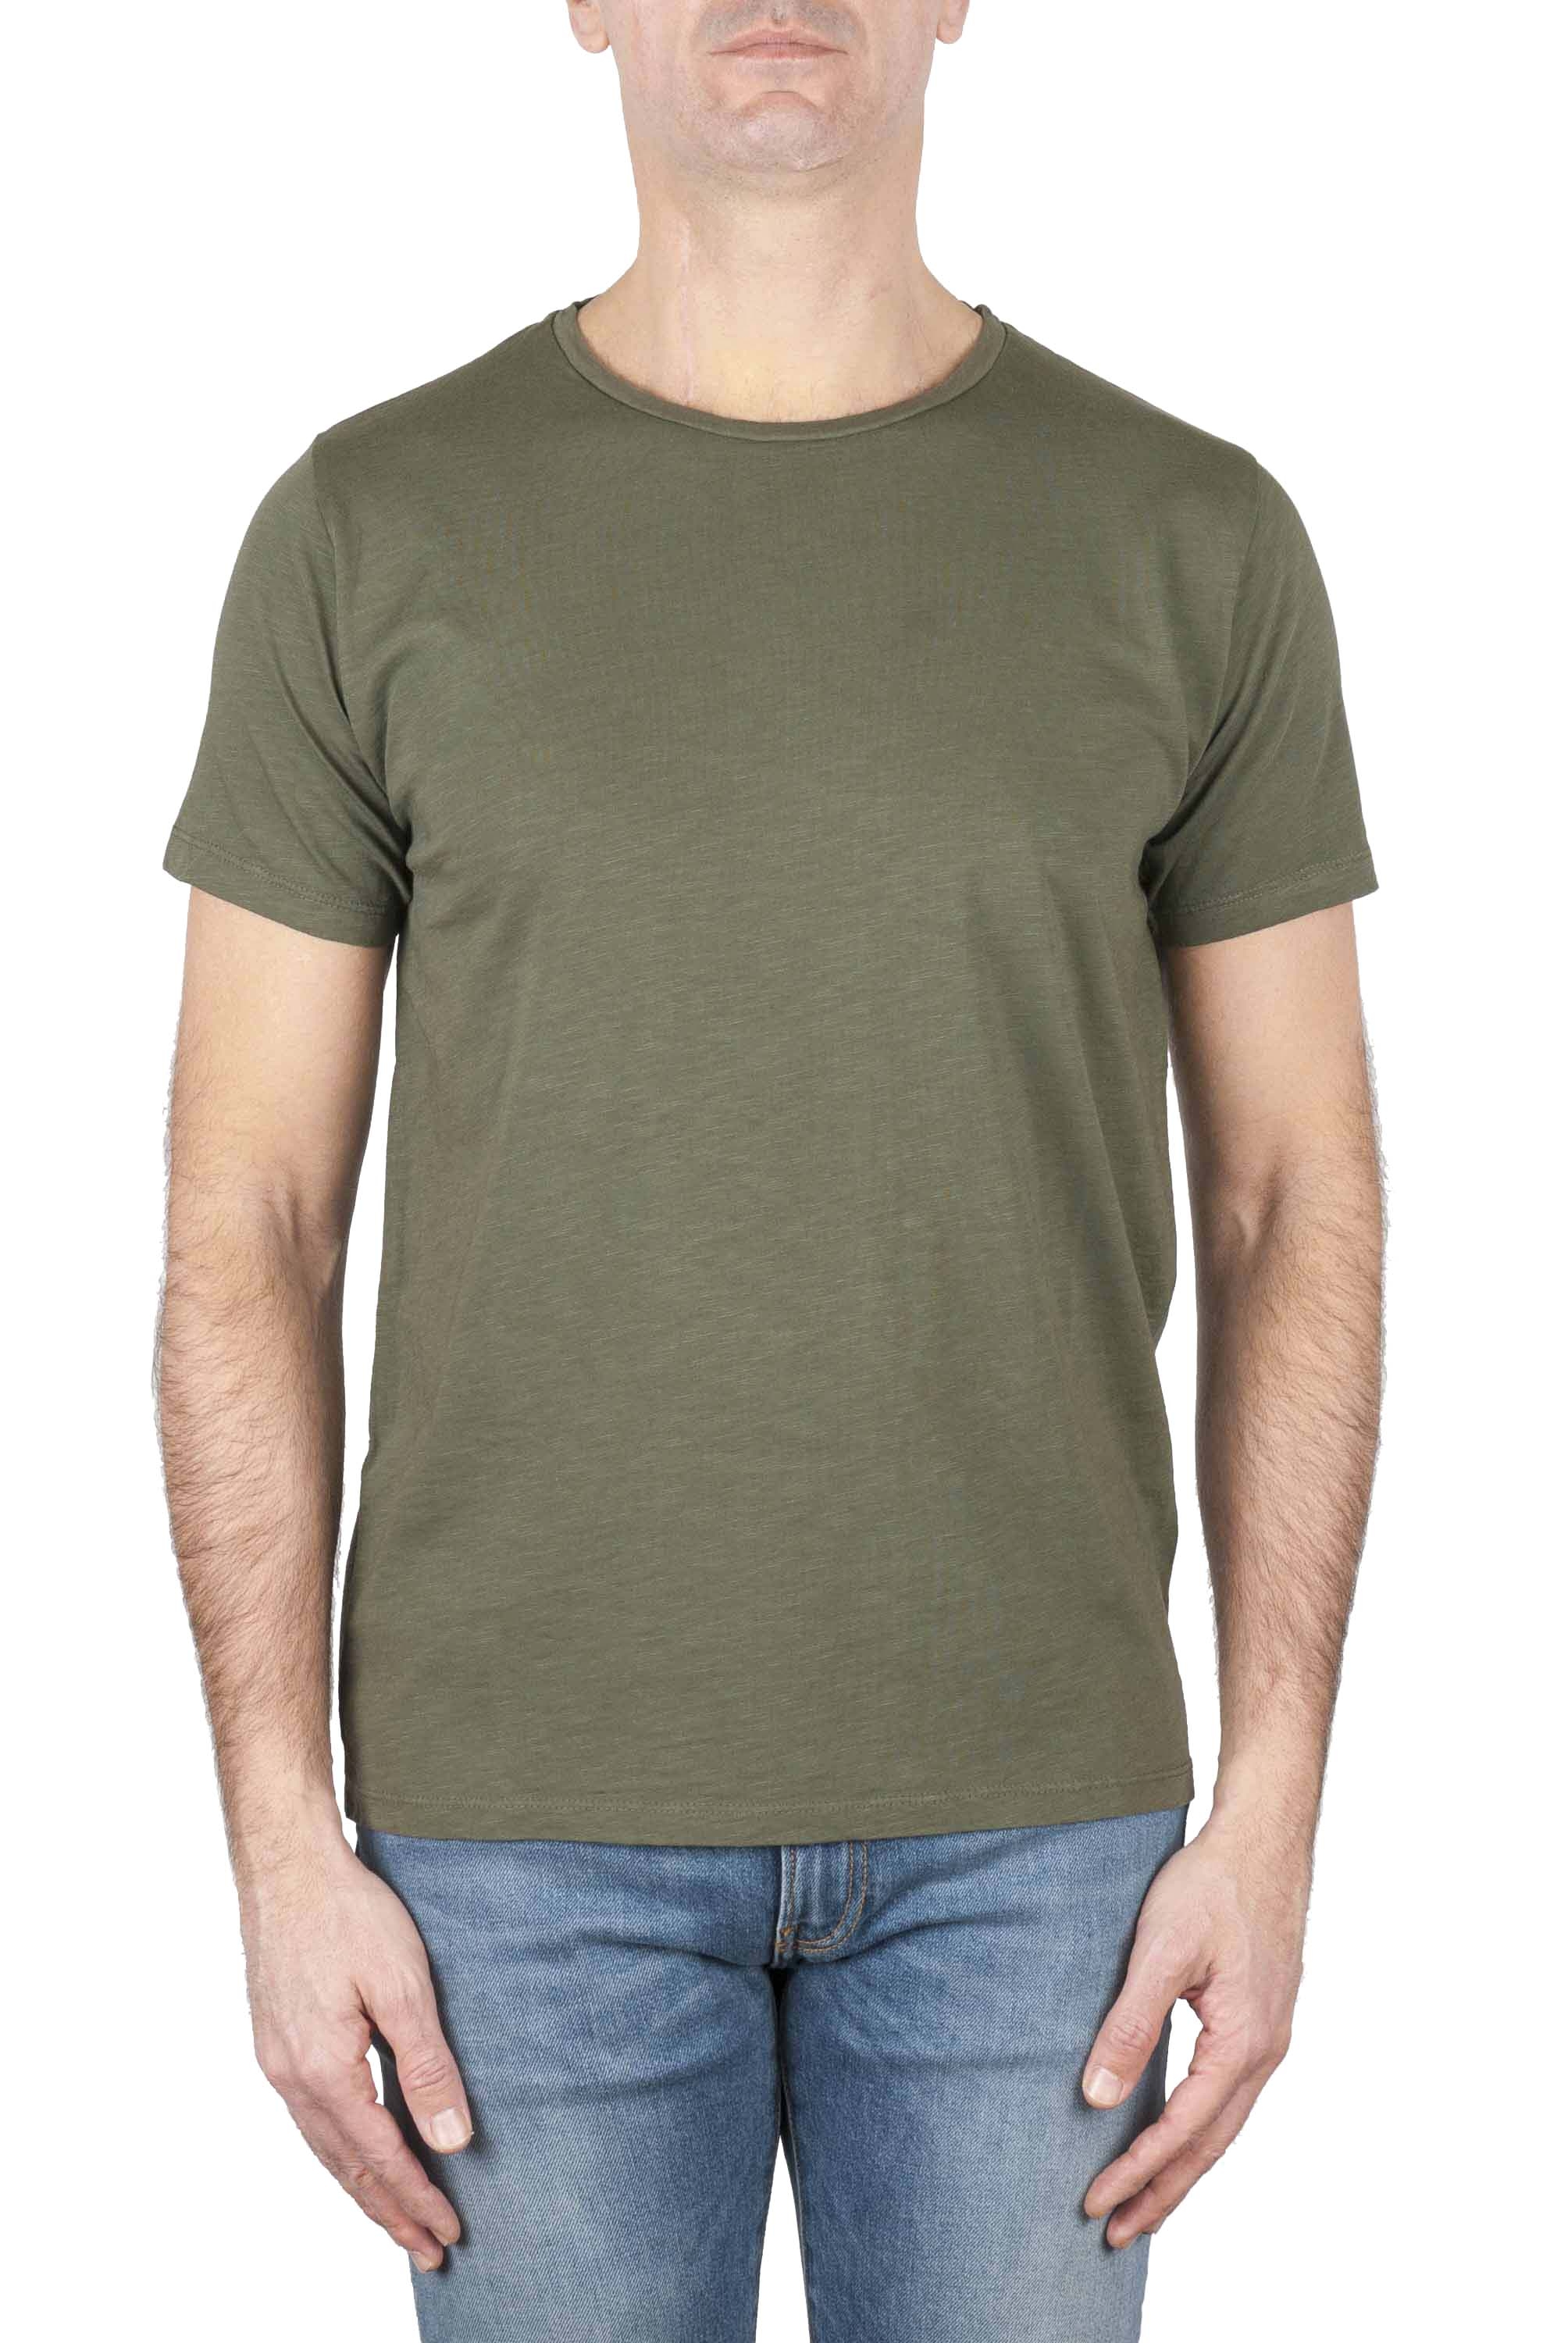 SBU 01645 T-shirt girocollo aperto in cotone fiammato verde 01